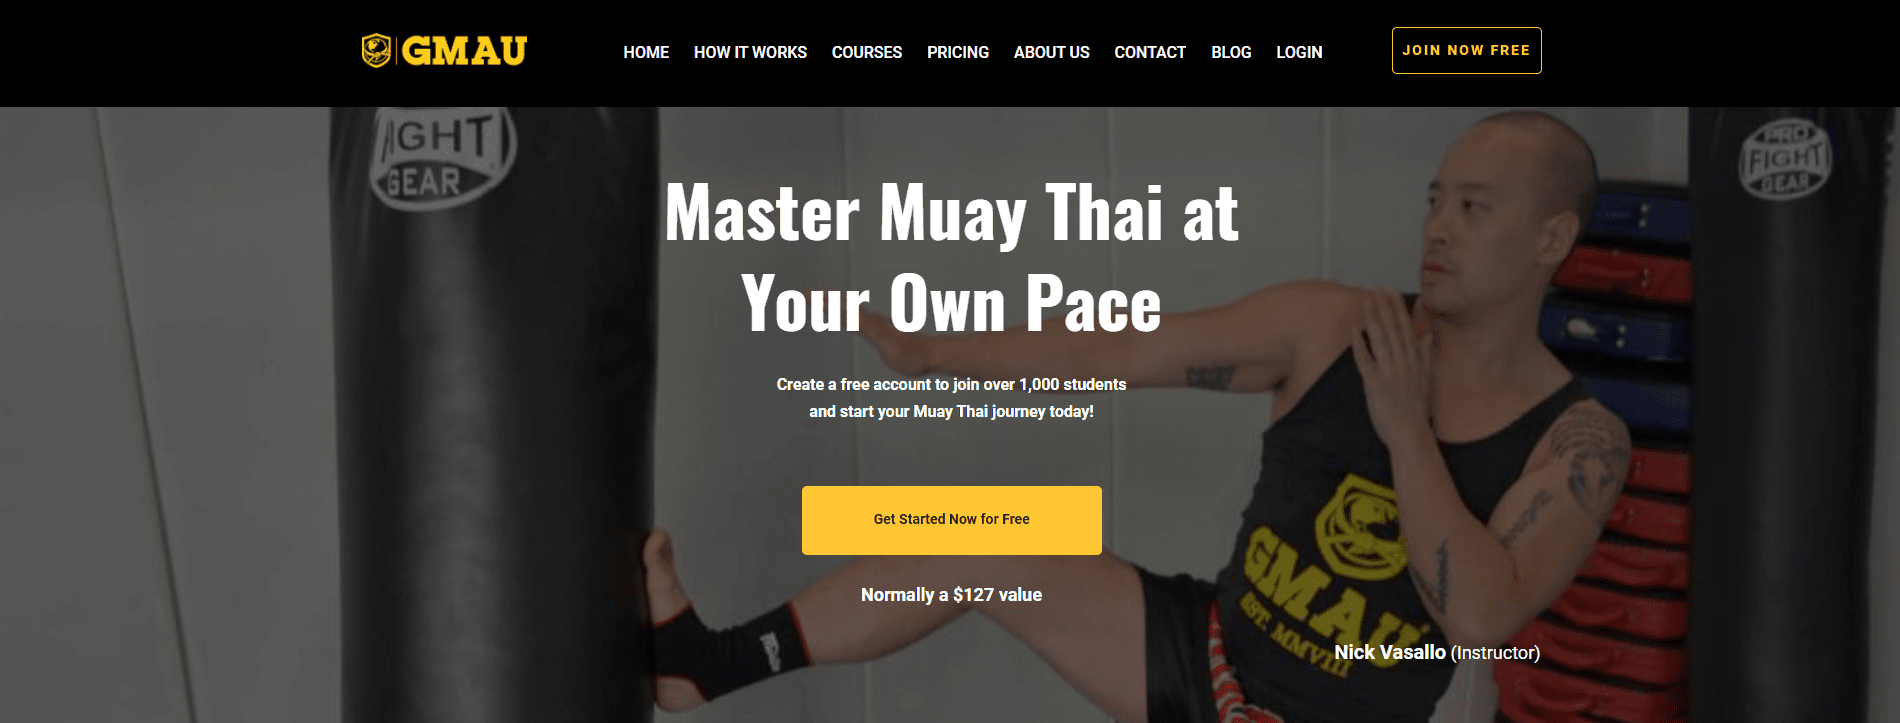 Master Muay Thai from Home (GMAU) - Online Martial Arts Training